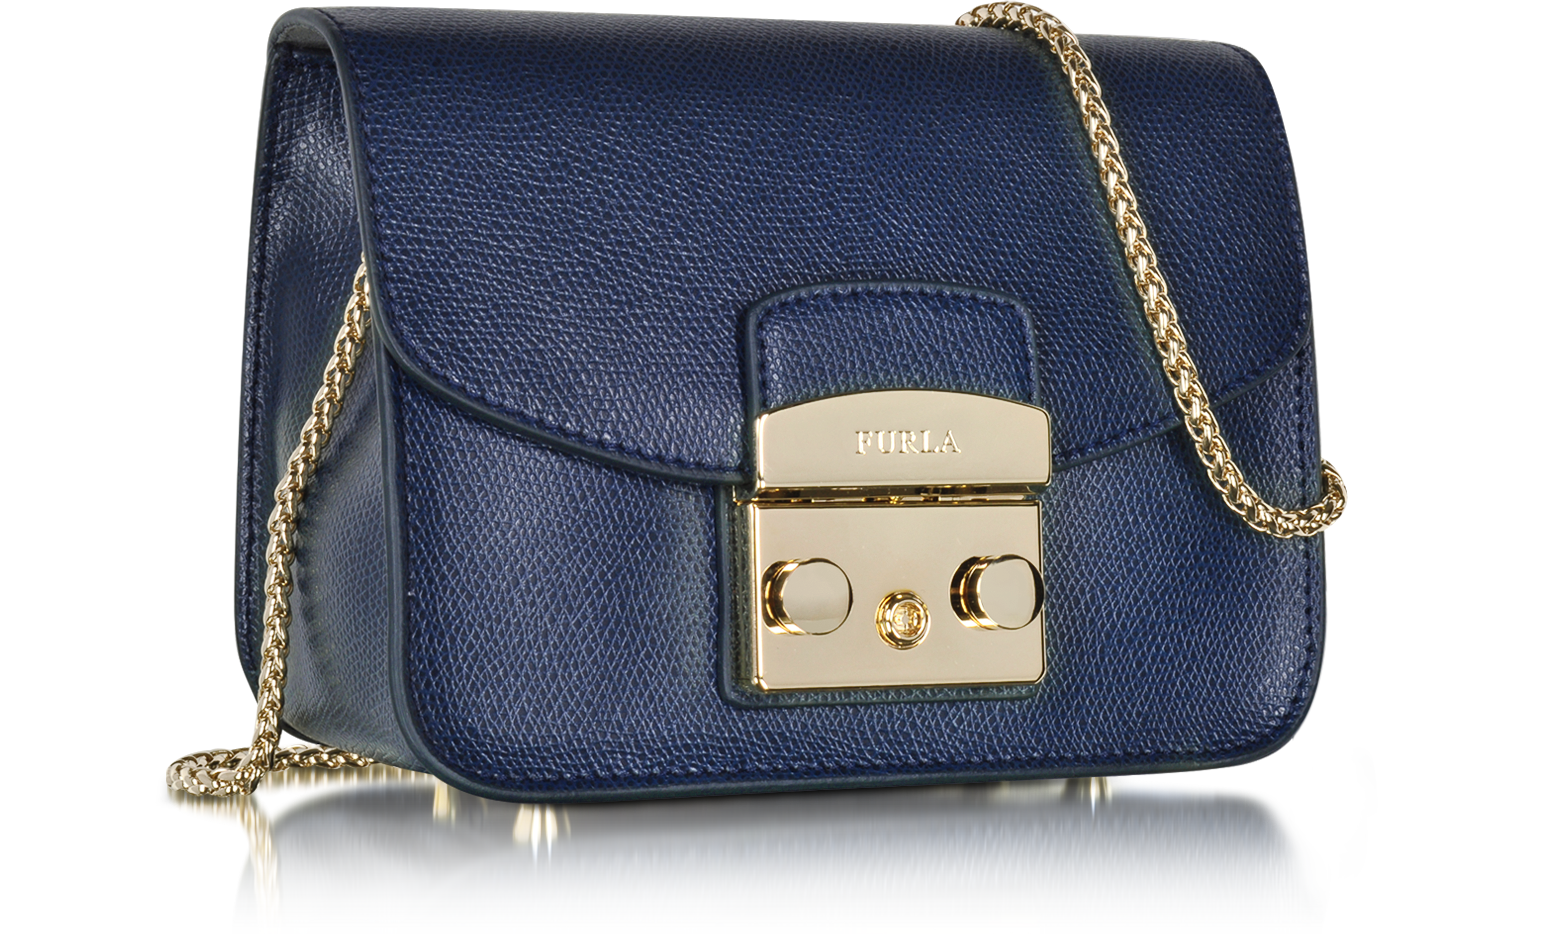 FURLA Metropolis Mini Navy Blue Leather Crossbody Bag in Avio Blue/Gold ...